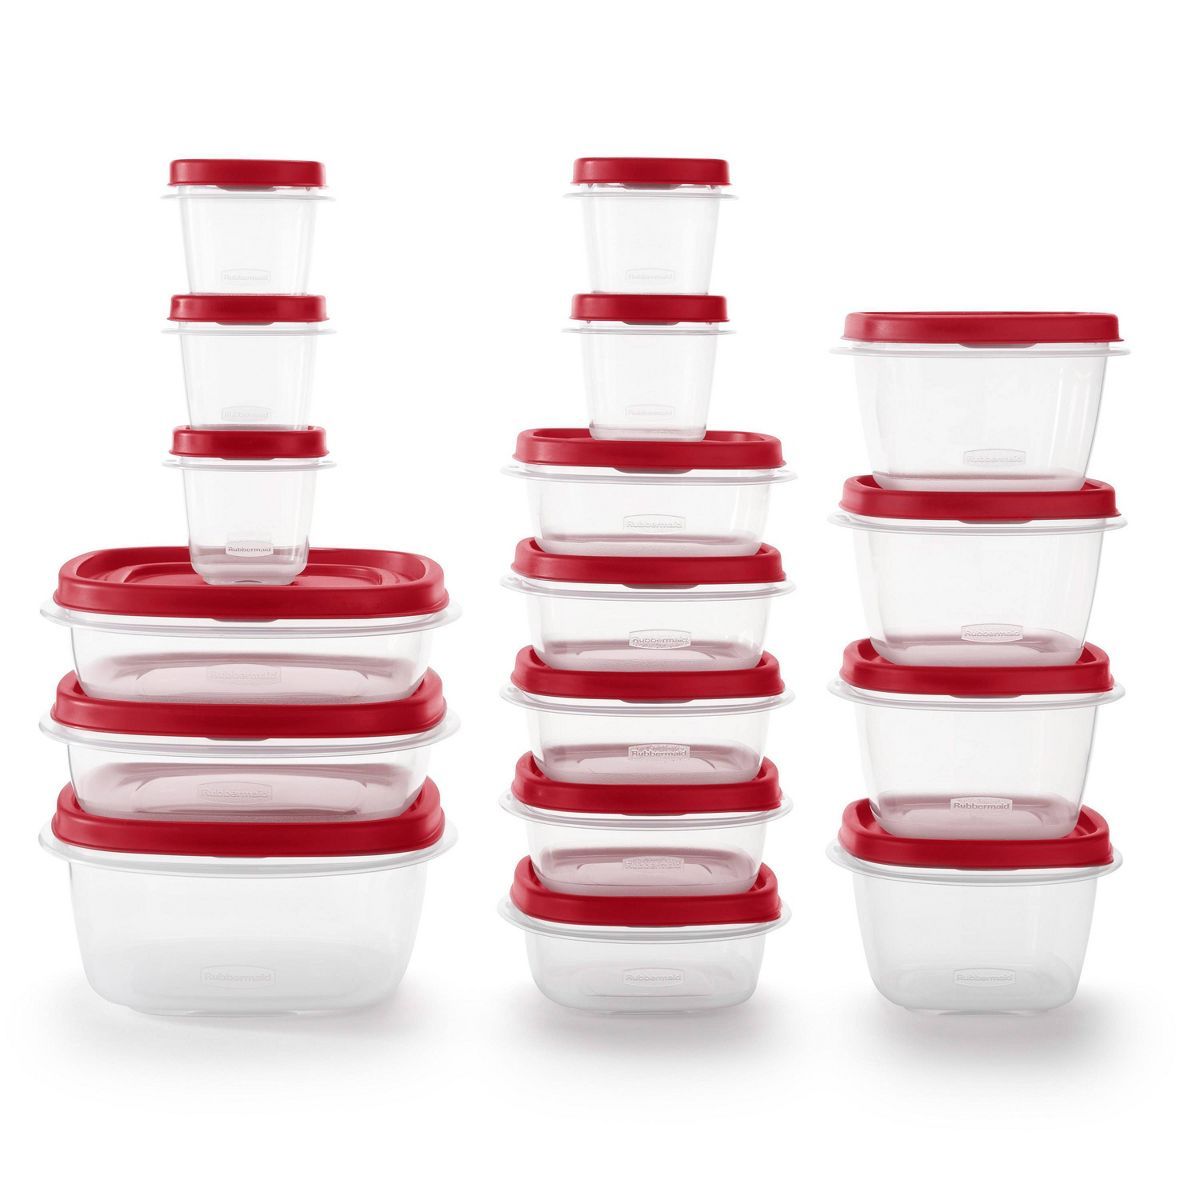 Rubbermaid 34pc Plastic Food Storage Container Set | Target